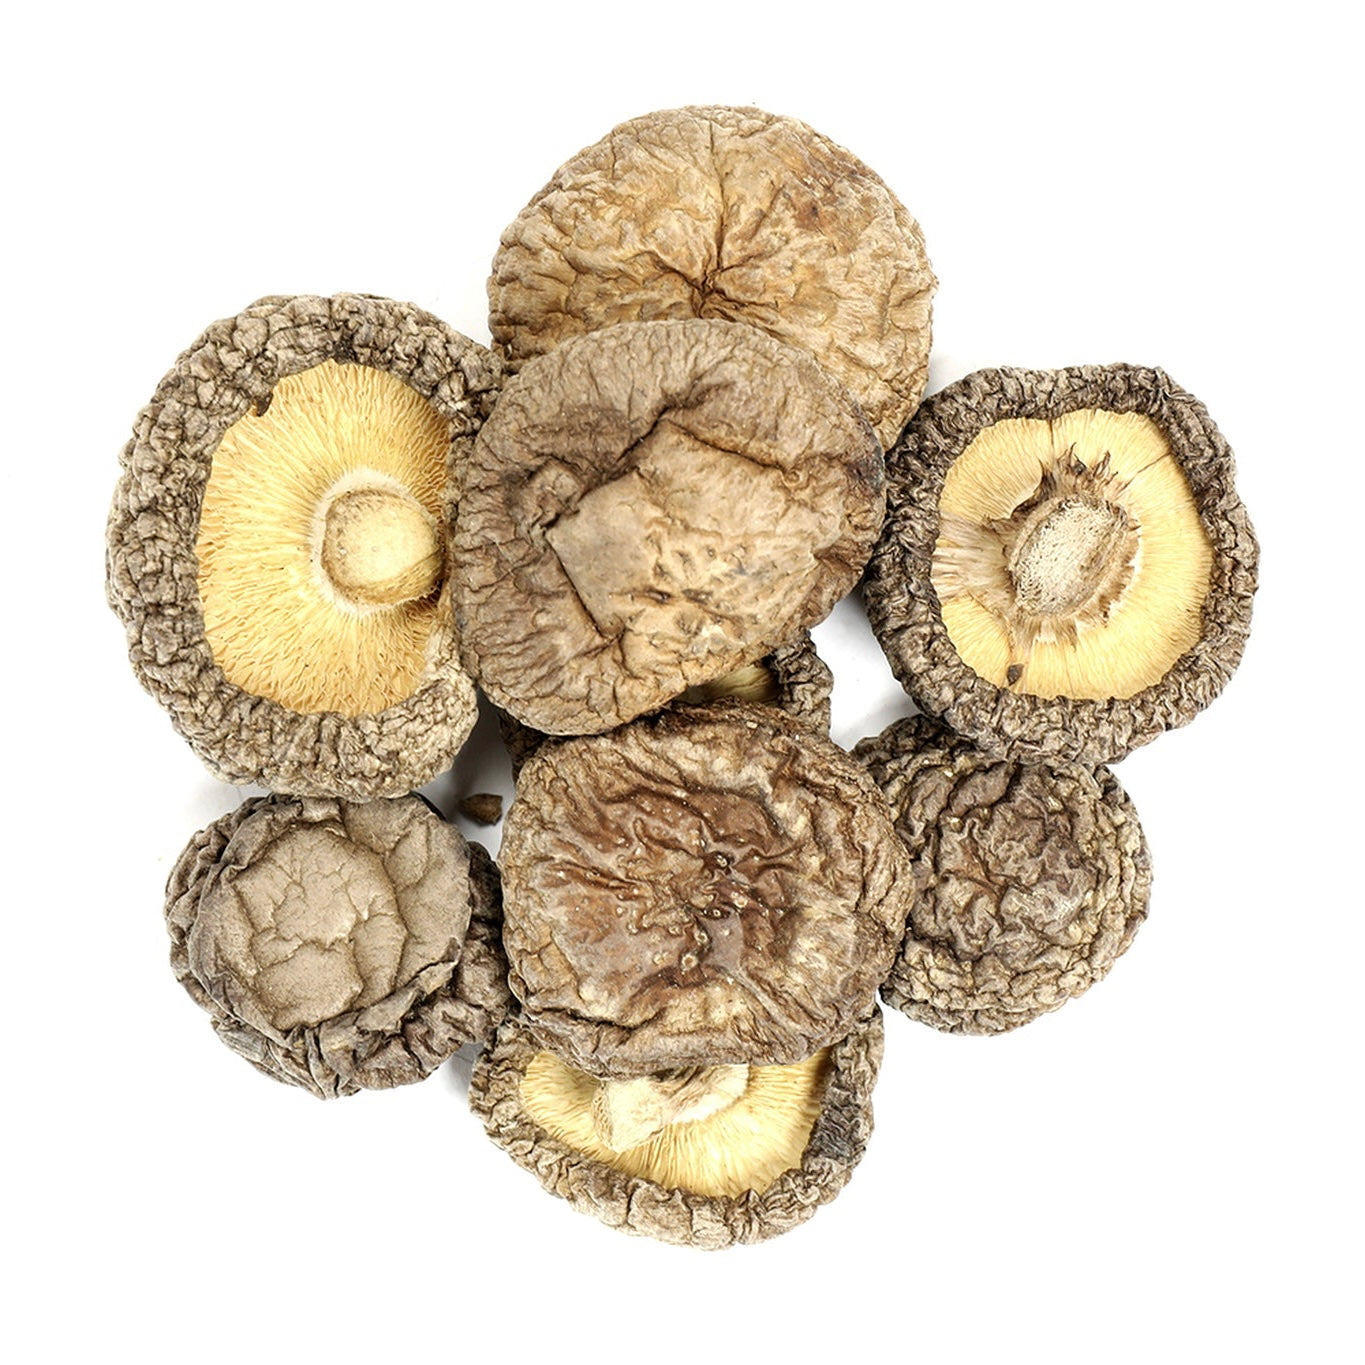 Shiitake Mushroom 3-4cm Stem Removed 200g (Shitake)